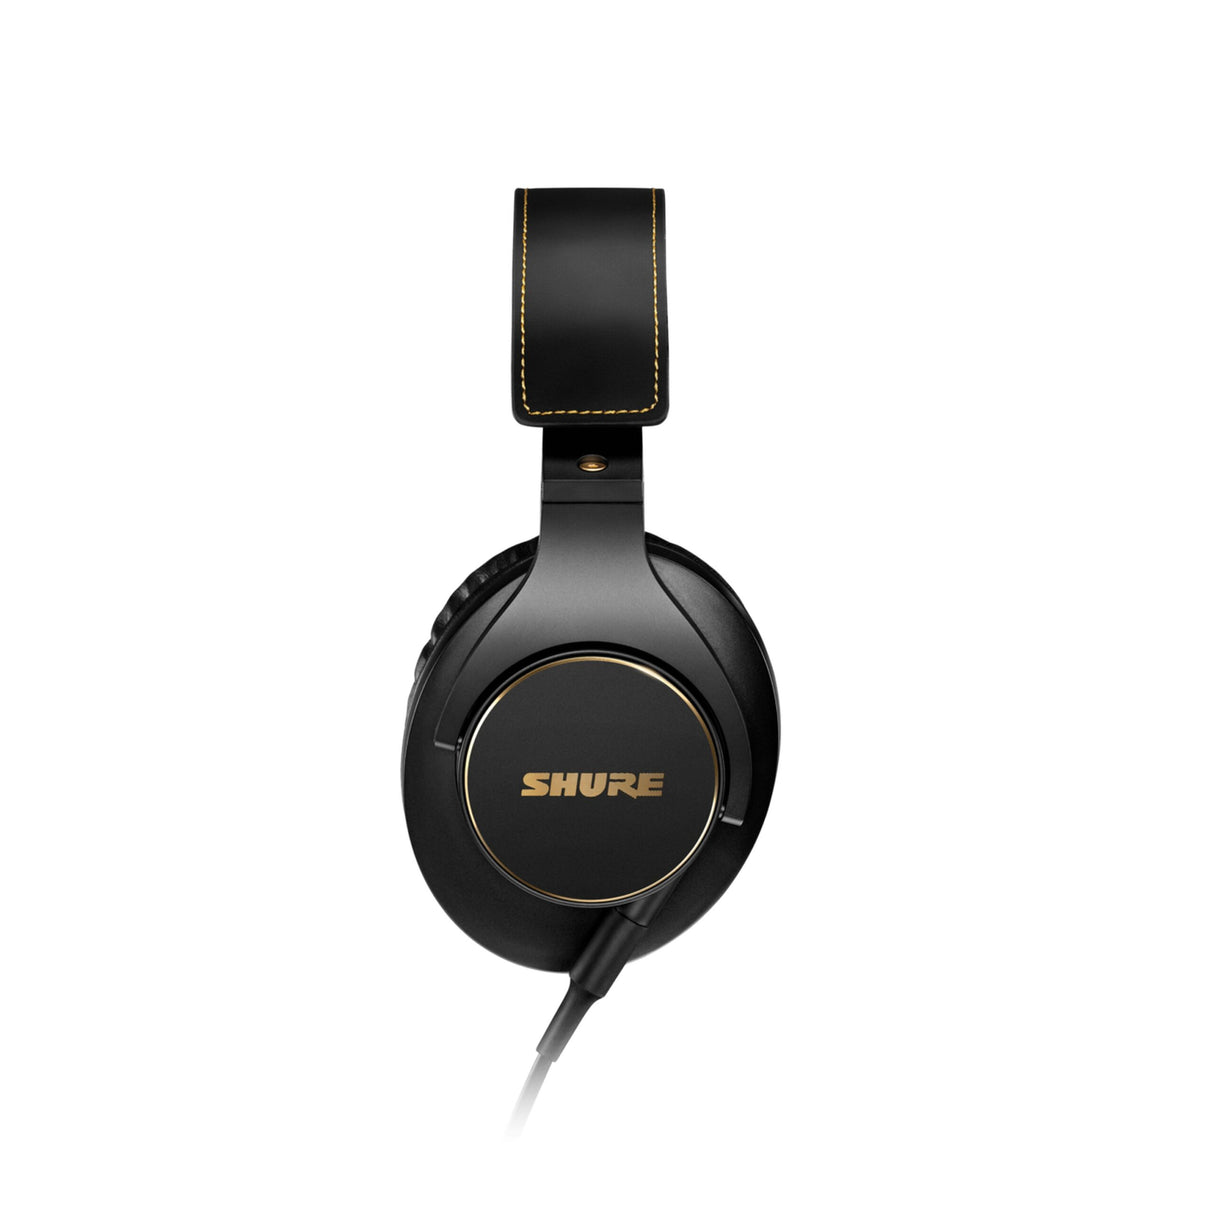 Shure SRH840A Professional Studio Over Ear Headphones (Used)